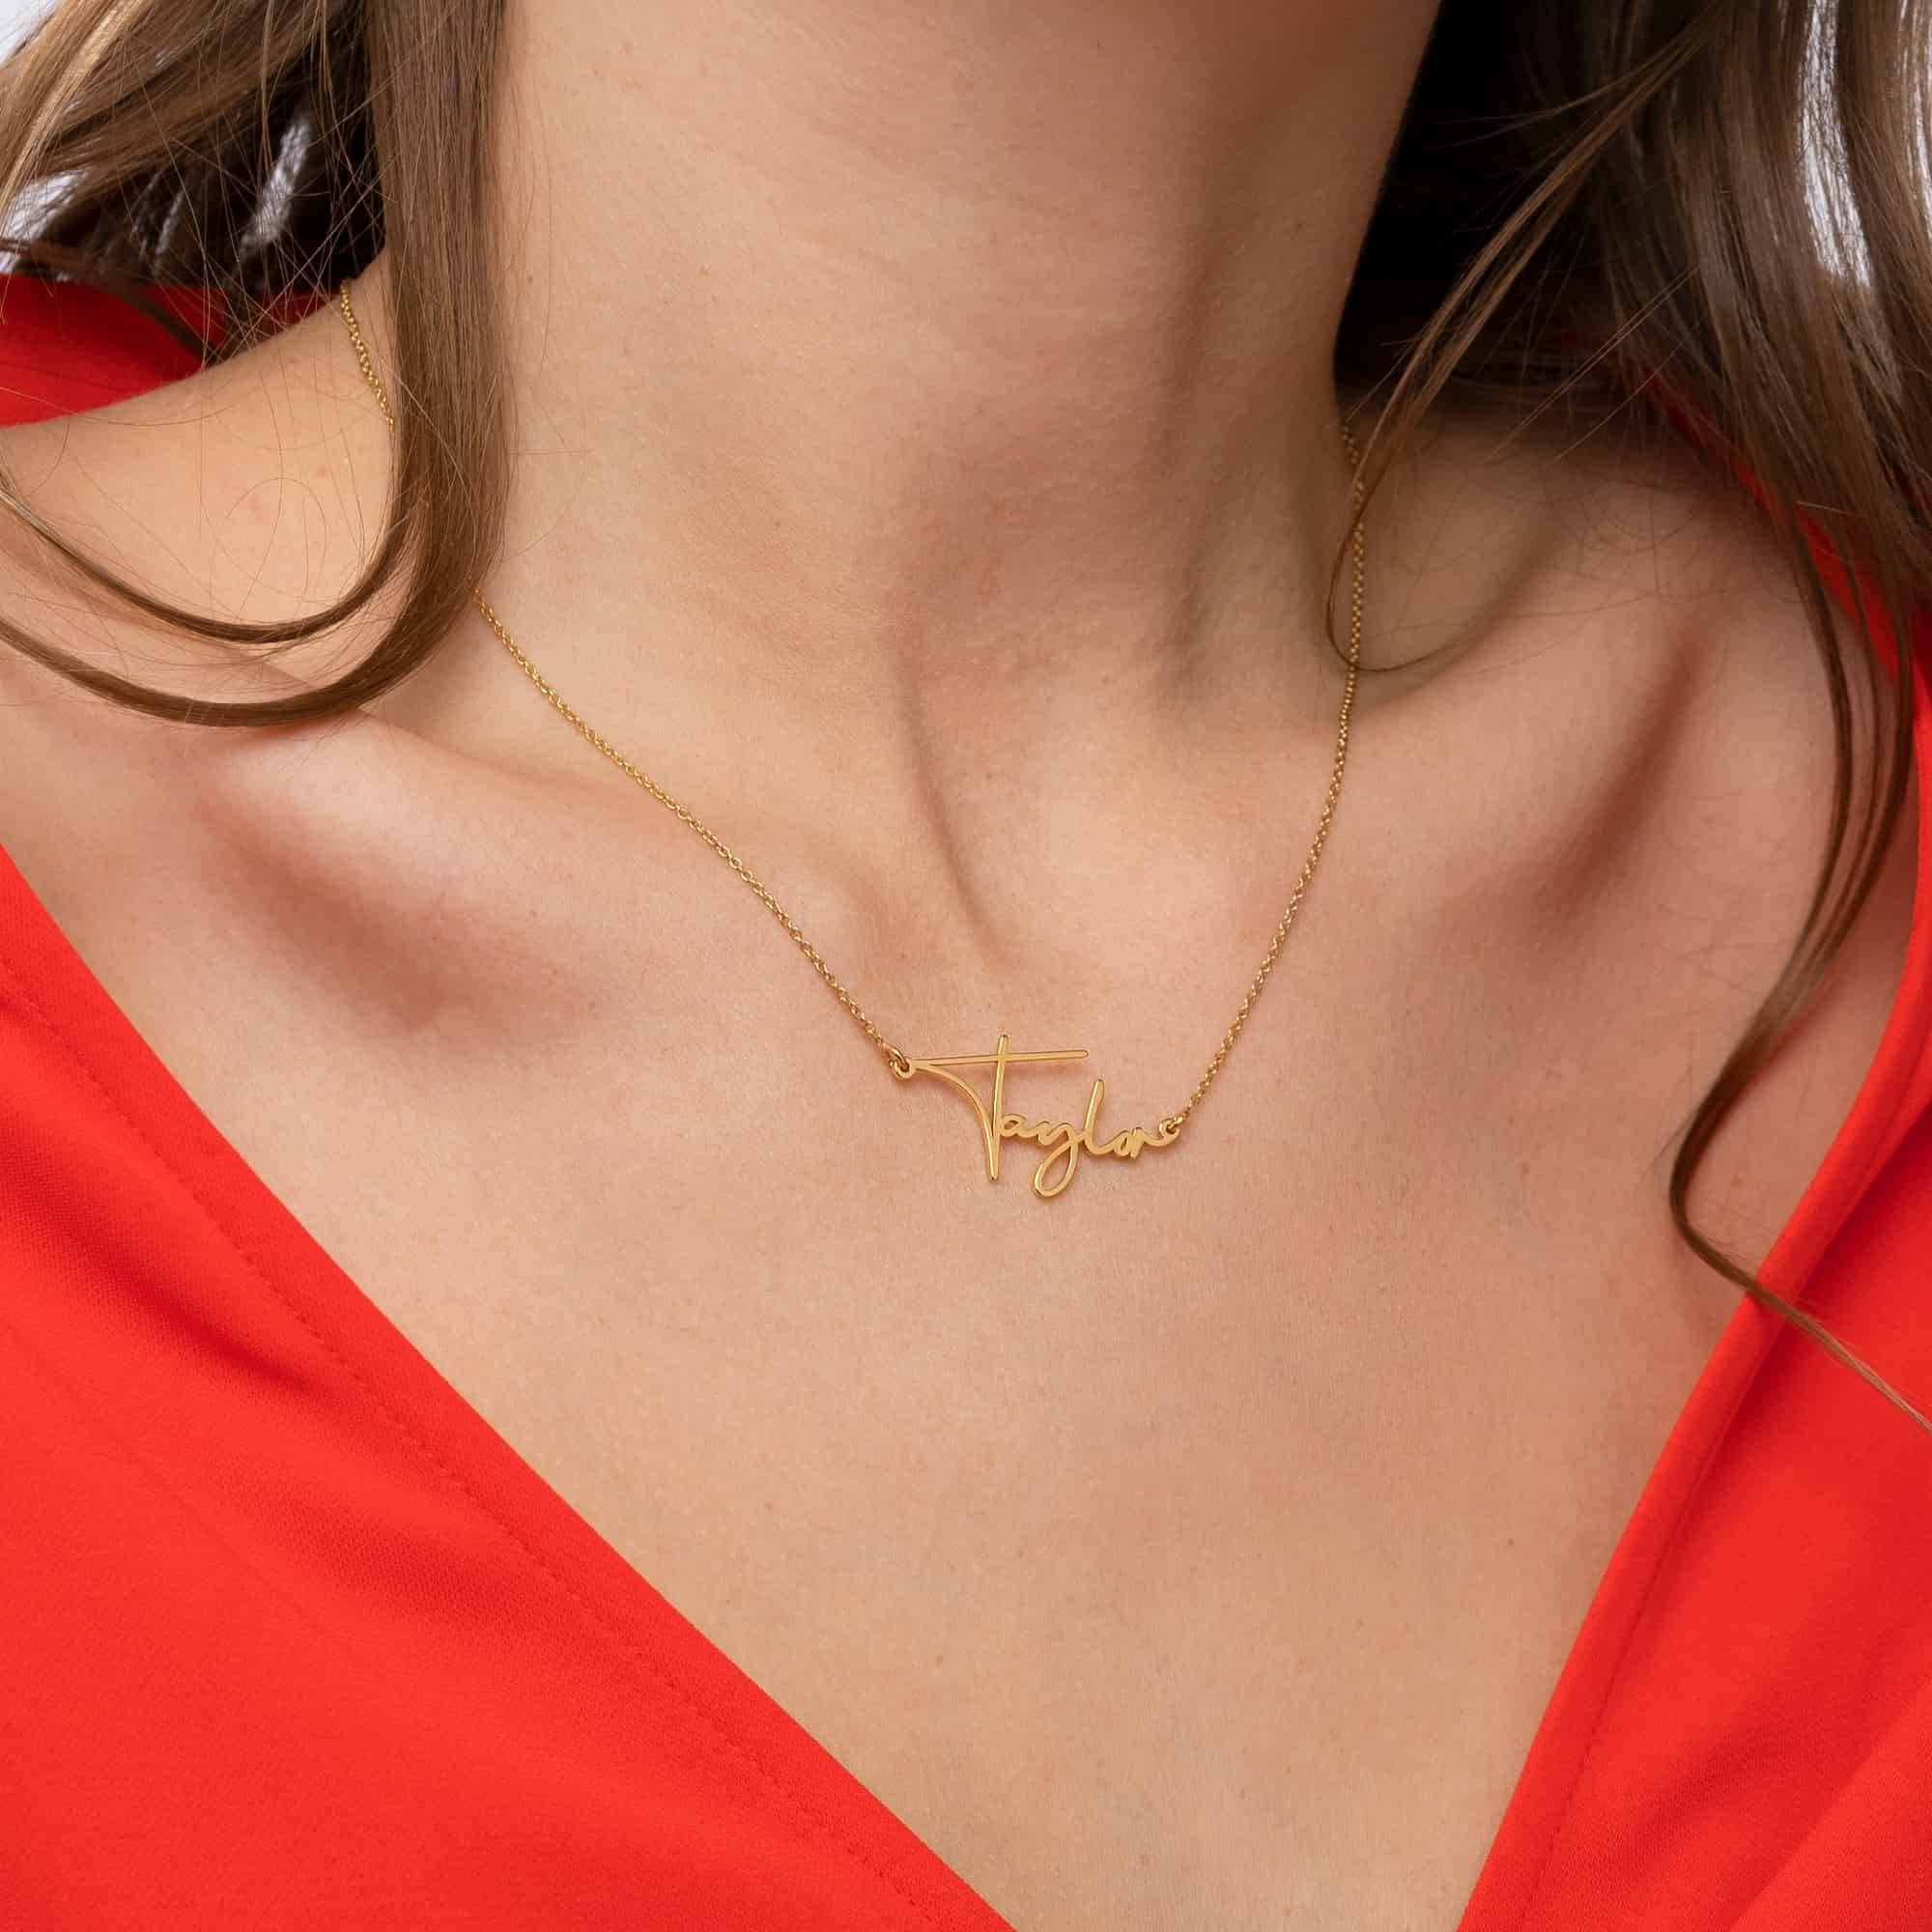 Paris Name Necklace in Gold Vermeil-3 product photo